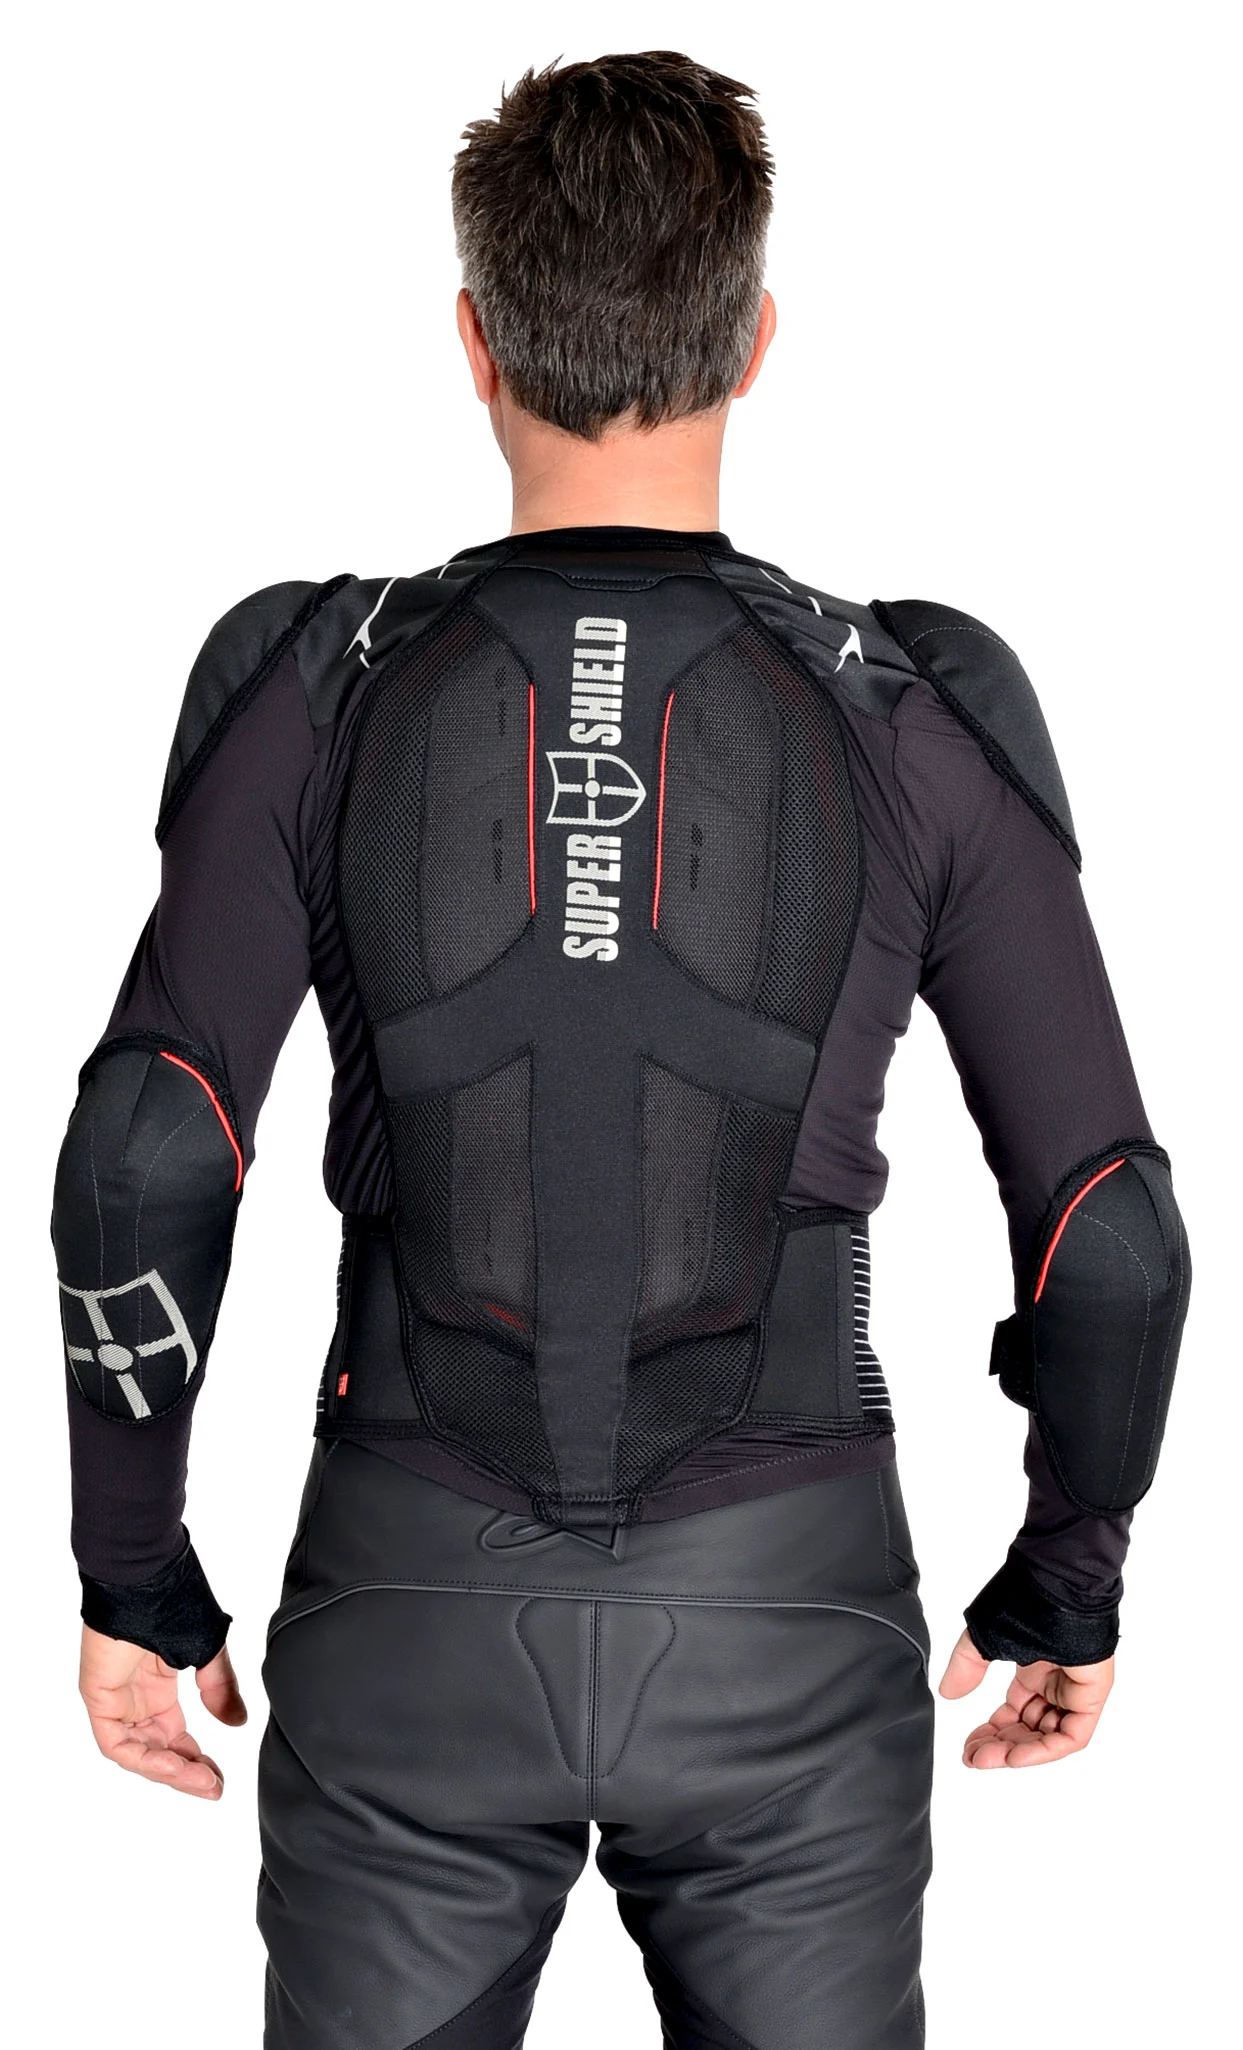 Super Shield Super Shield Protector Jacket